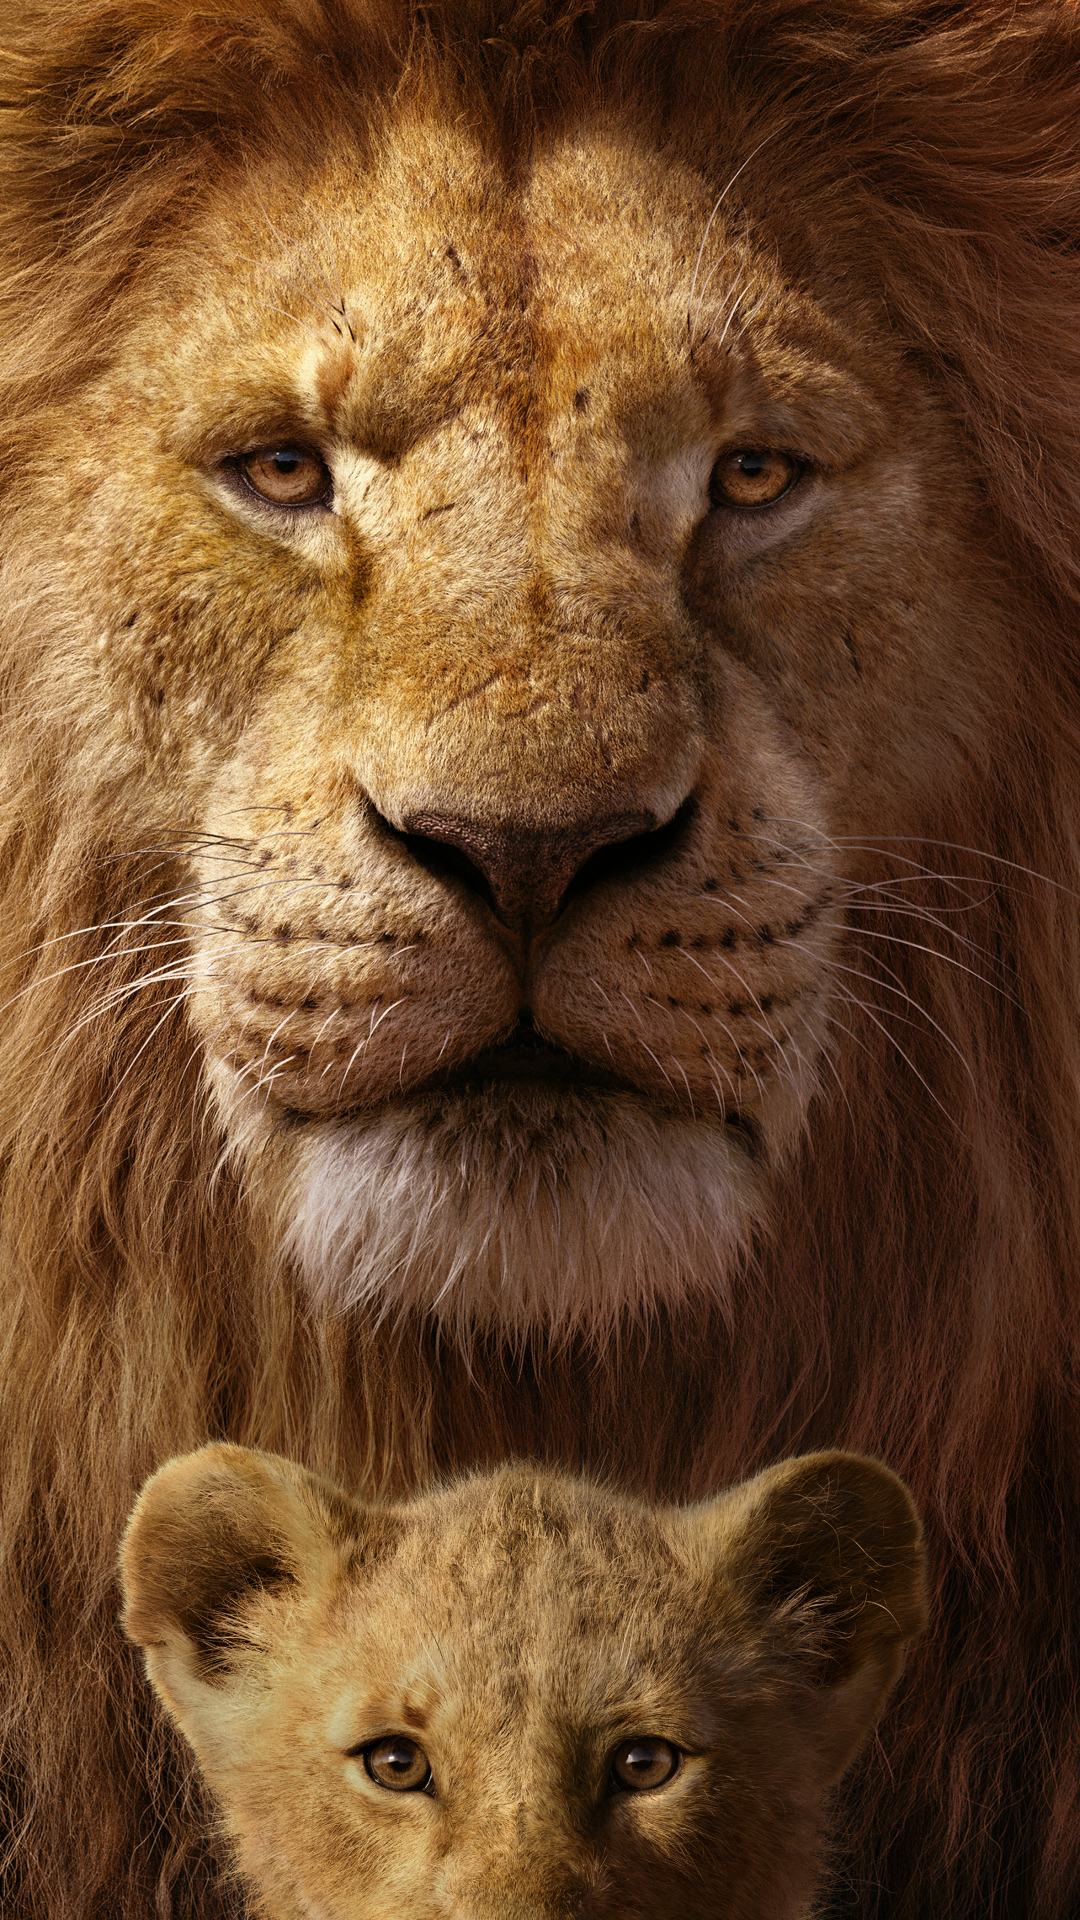 mufasa (the lion king), the lion king (2019), movie, simba